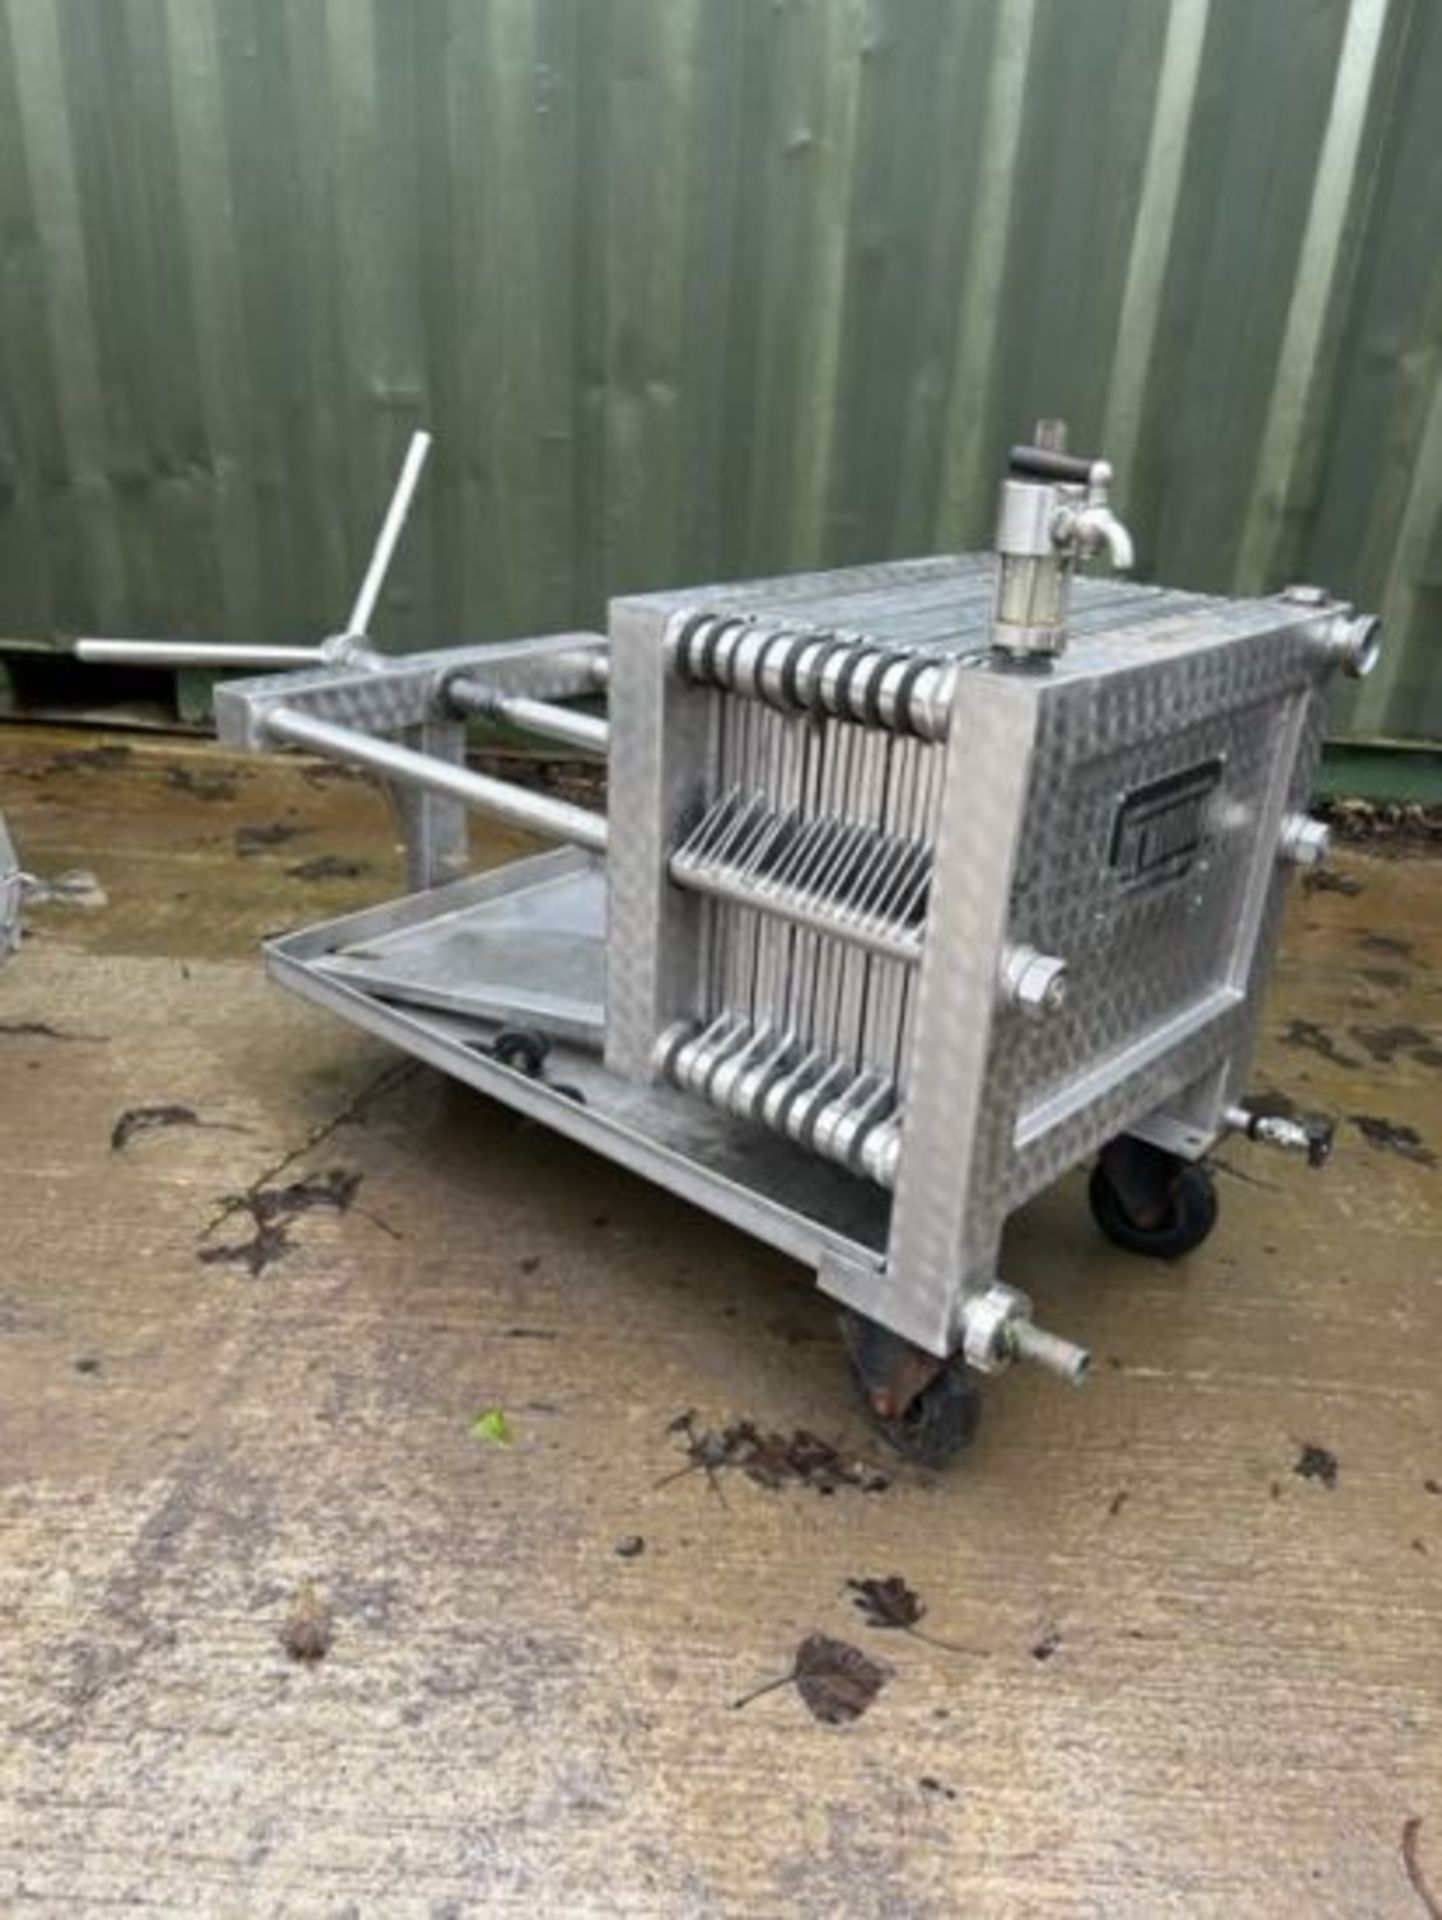 Brüning s/s filter press on trolley, dimensions: 1400 mm x 510 mm x 800 mm.